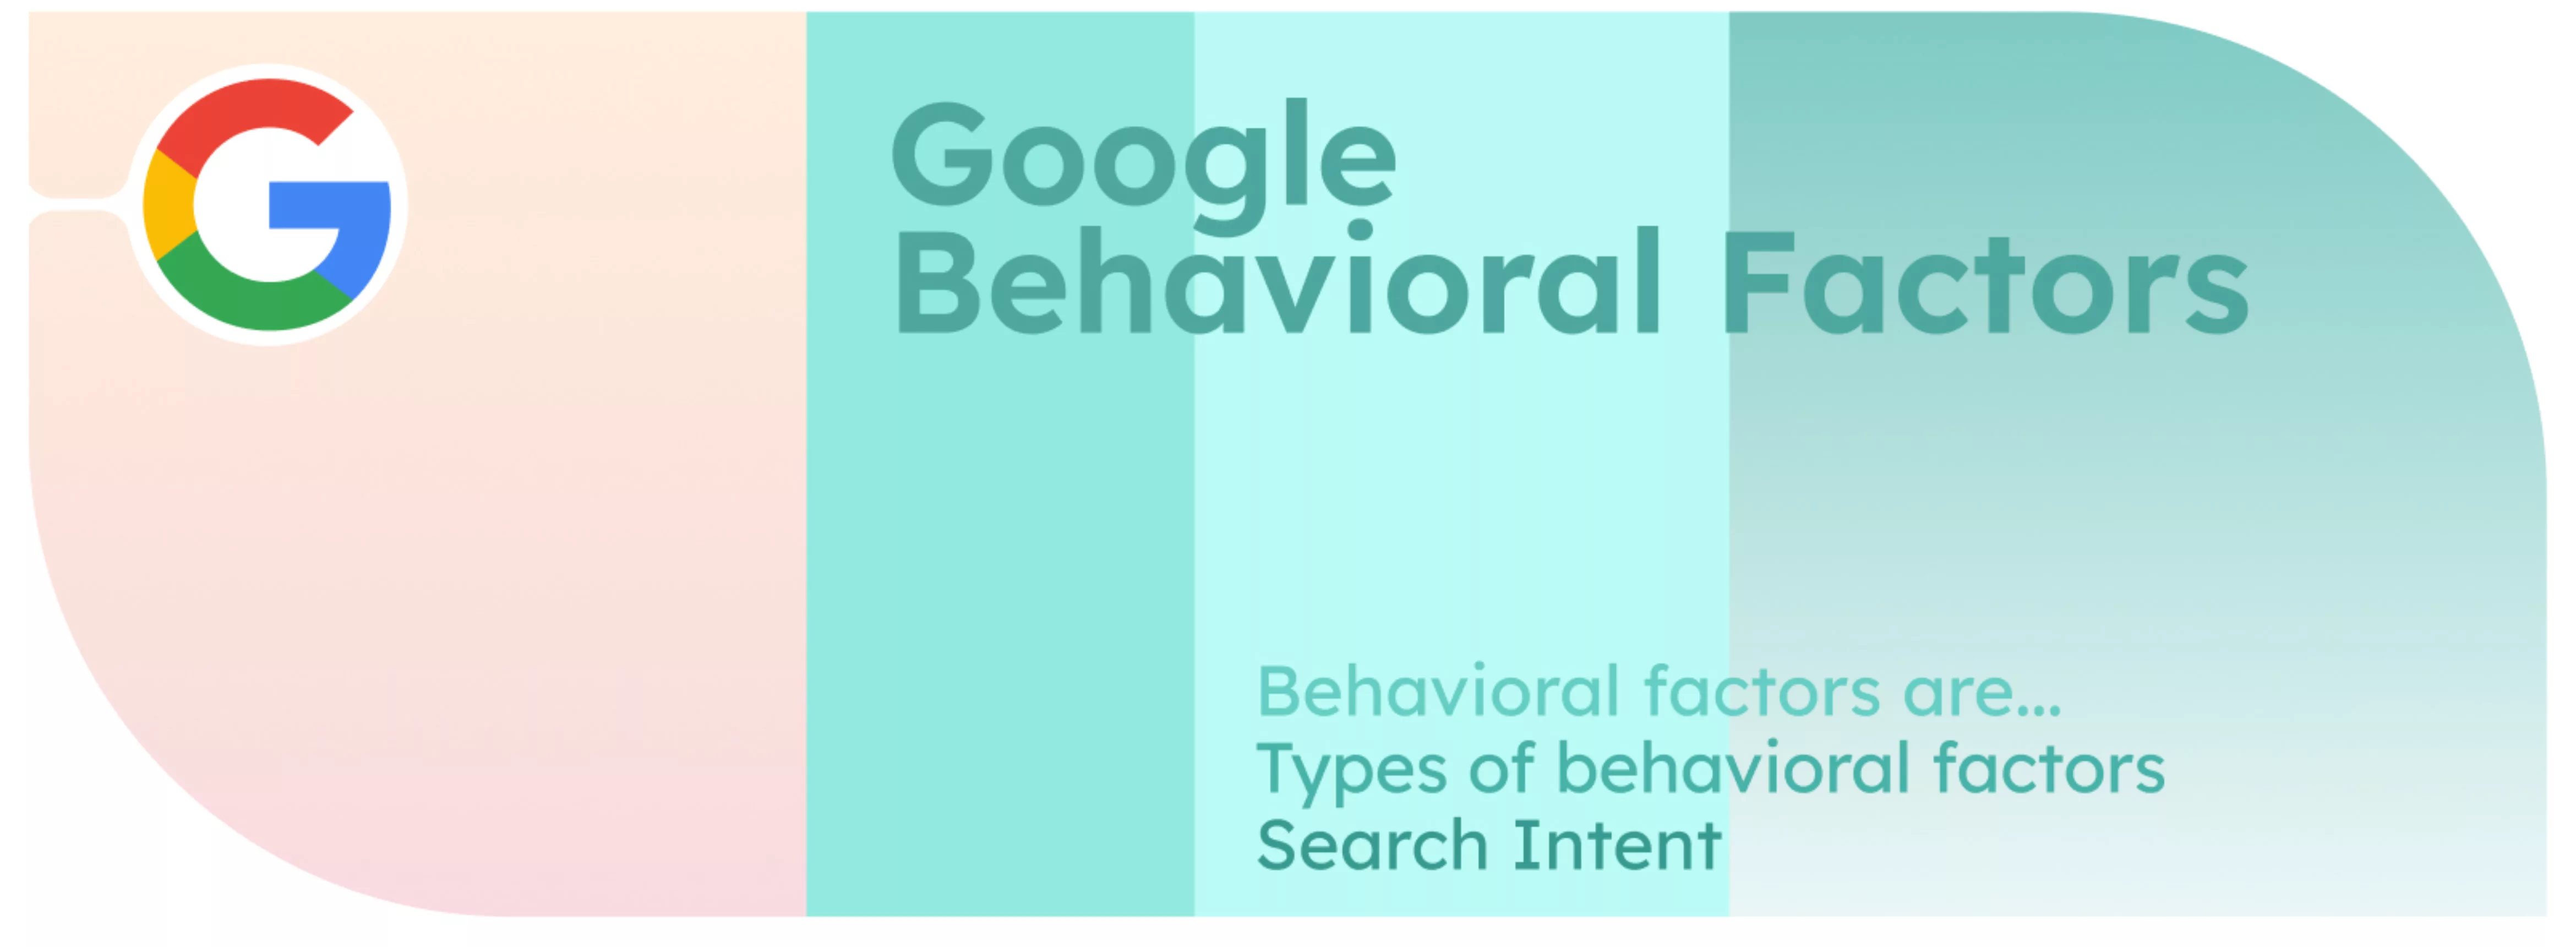 Google-Verhaltensfaktoren